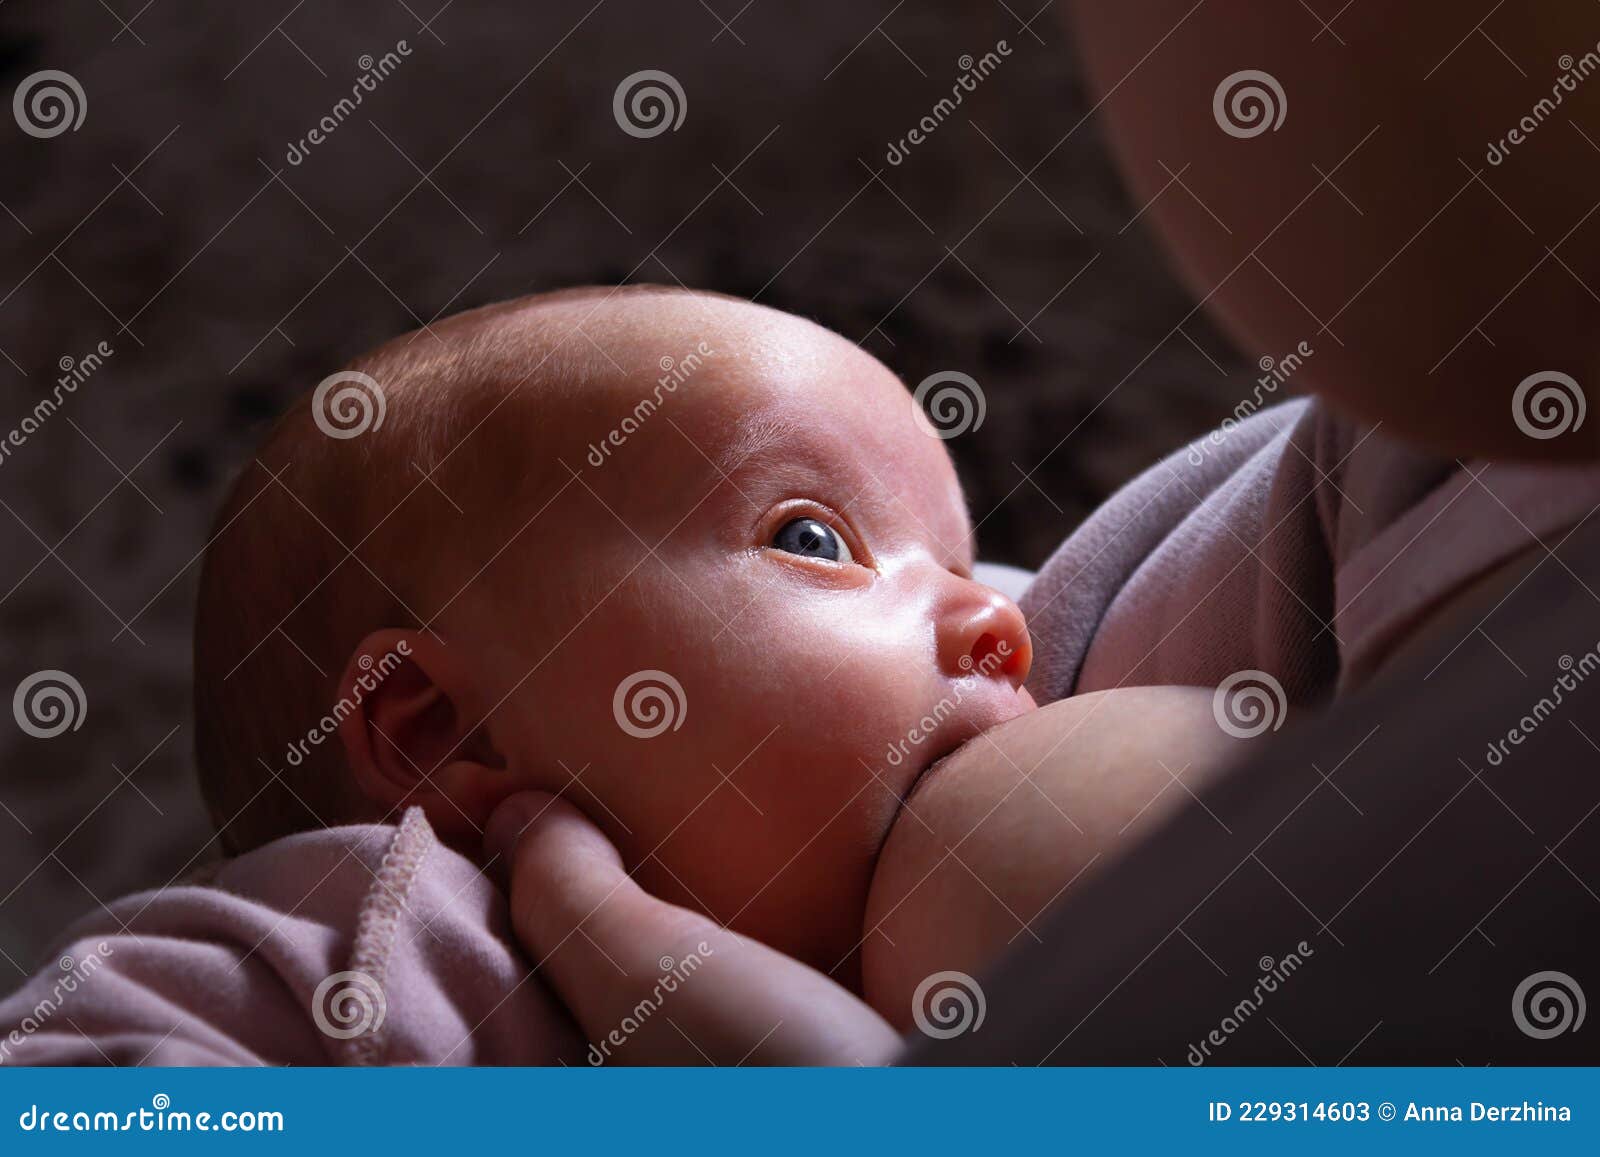 https://thumbs.dreamstime.com/z/mother-breastfeeding-newborn-baby-girl-top-view-caucasian-unrecognizable-pink-bodysuit-focus-s-face-229314603.jpg